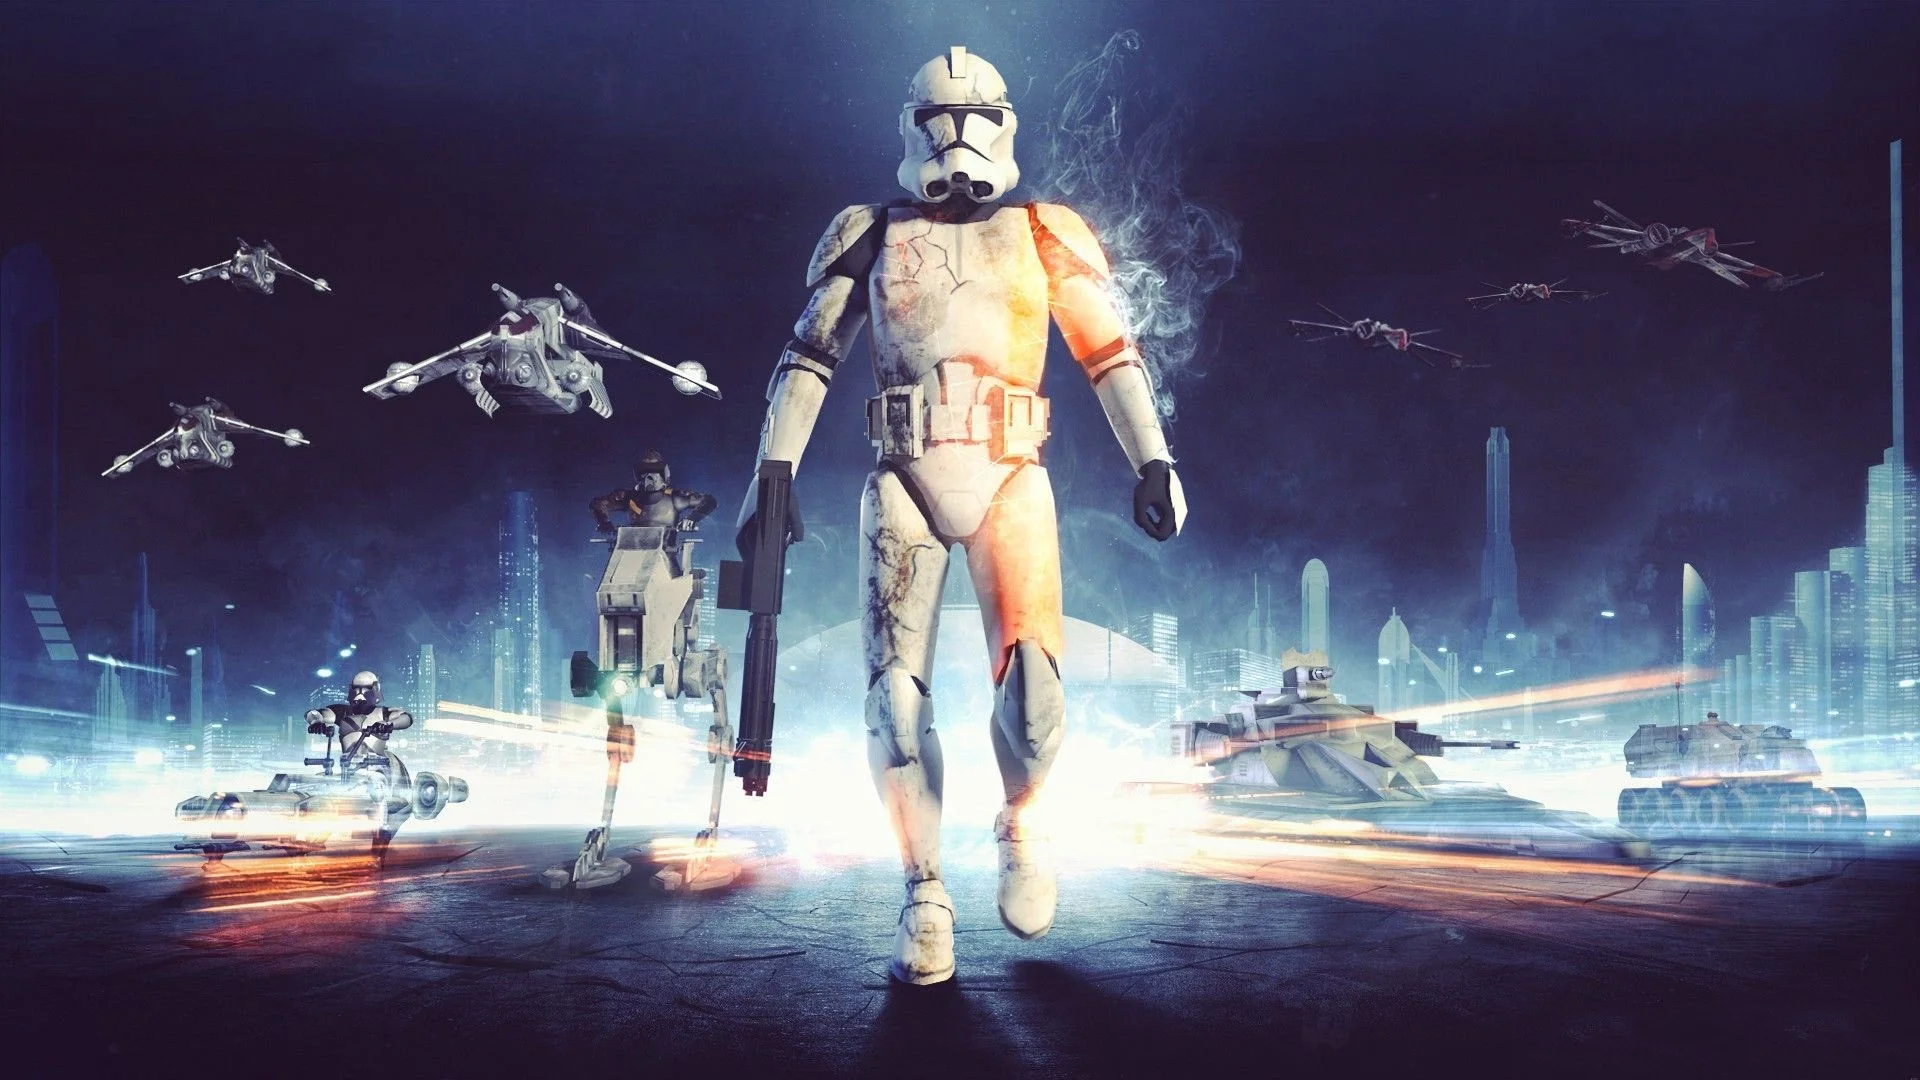 Video game star wars Clone Trooper 950x1534 wallpaper  Star wars  images Star wars pictures Star wars artwork